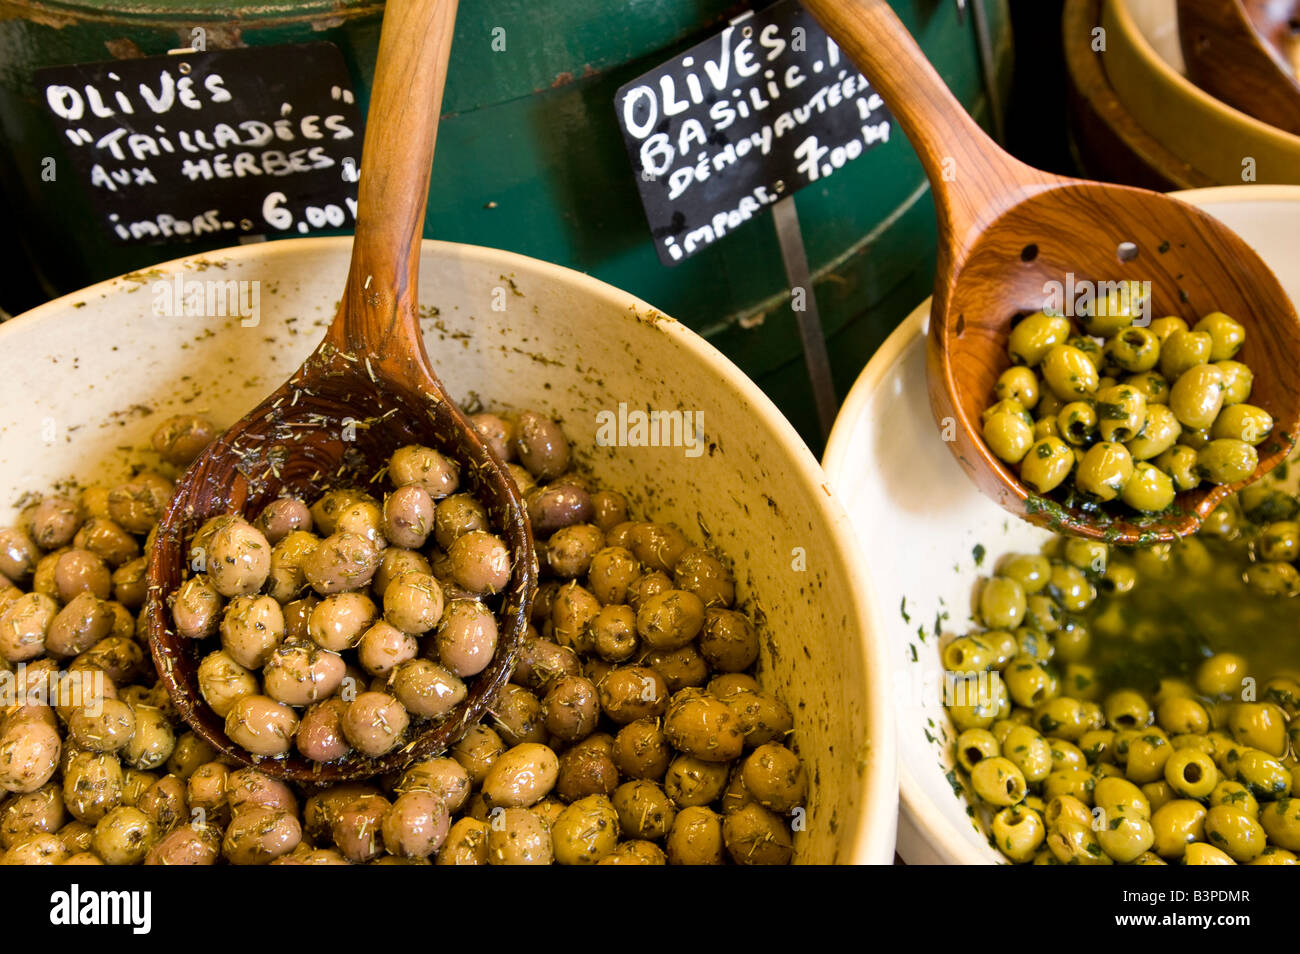 France, Cote d'Azur, Nice, Olives for sale Stock Photo